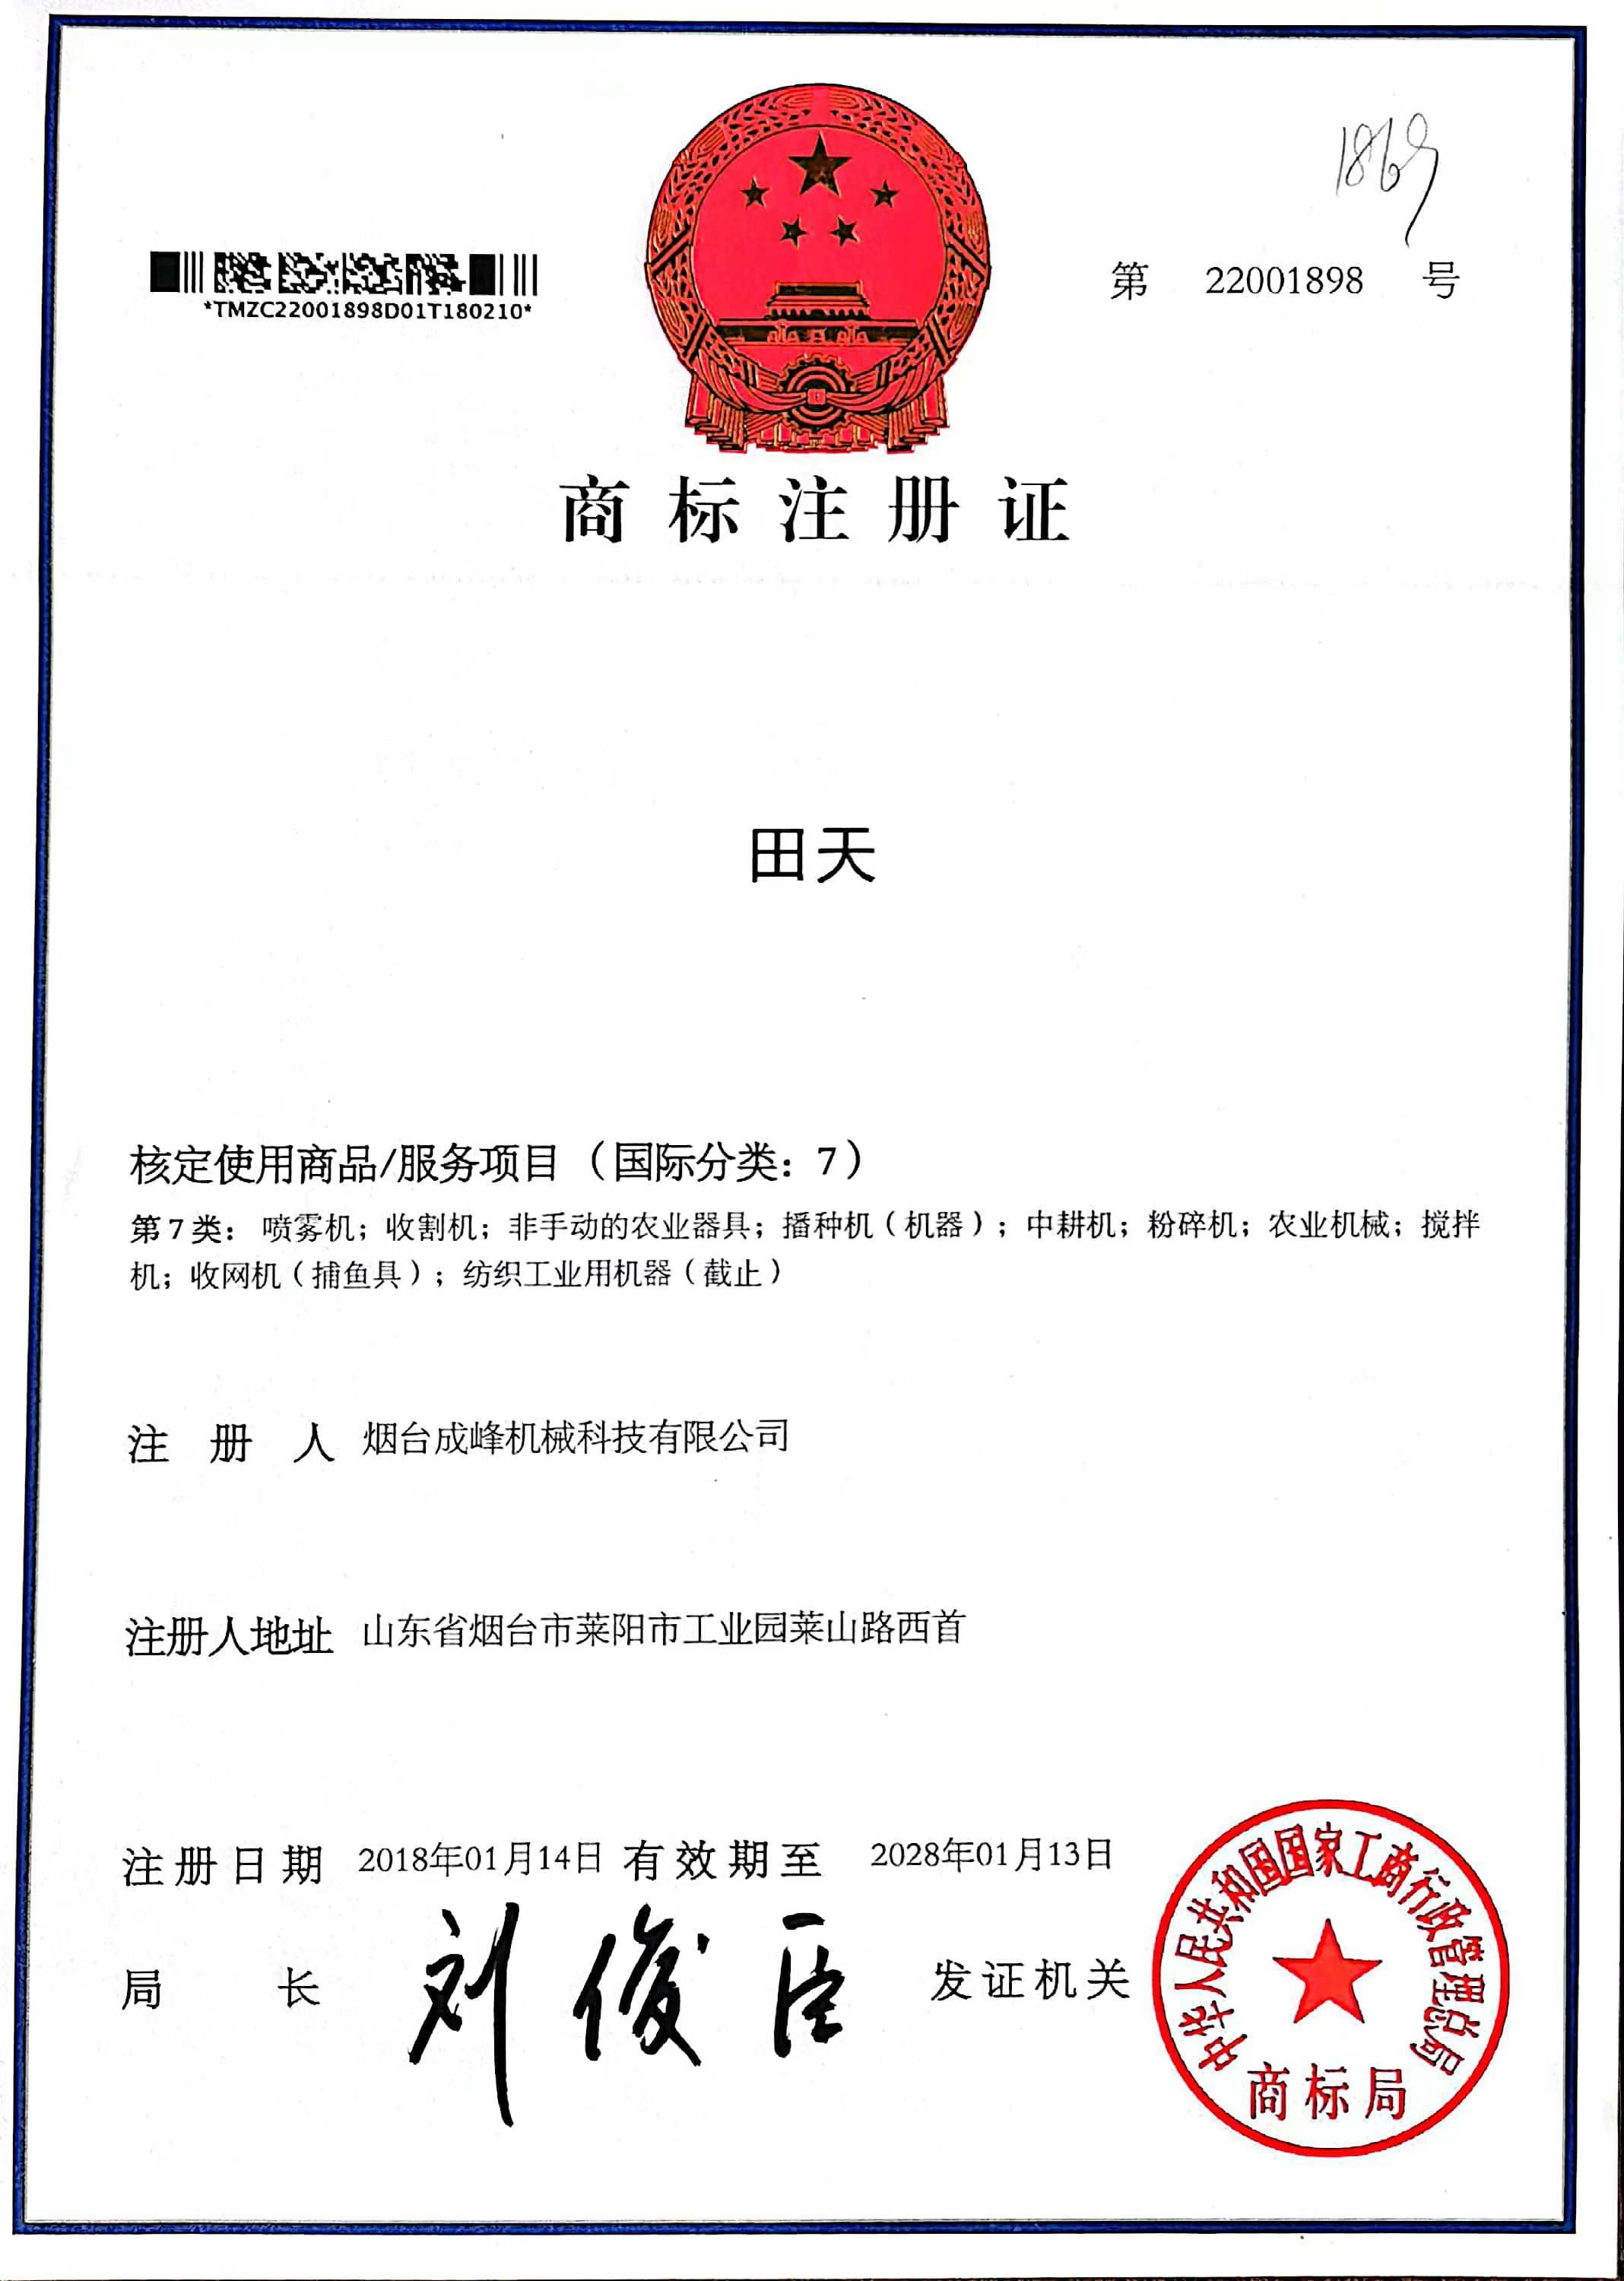 Trademark registration certificate 2 2